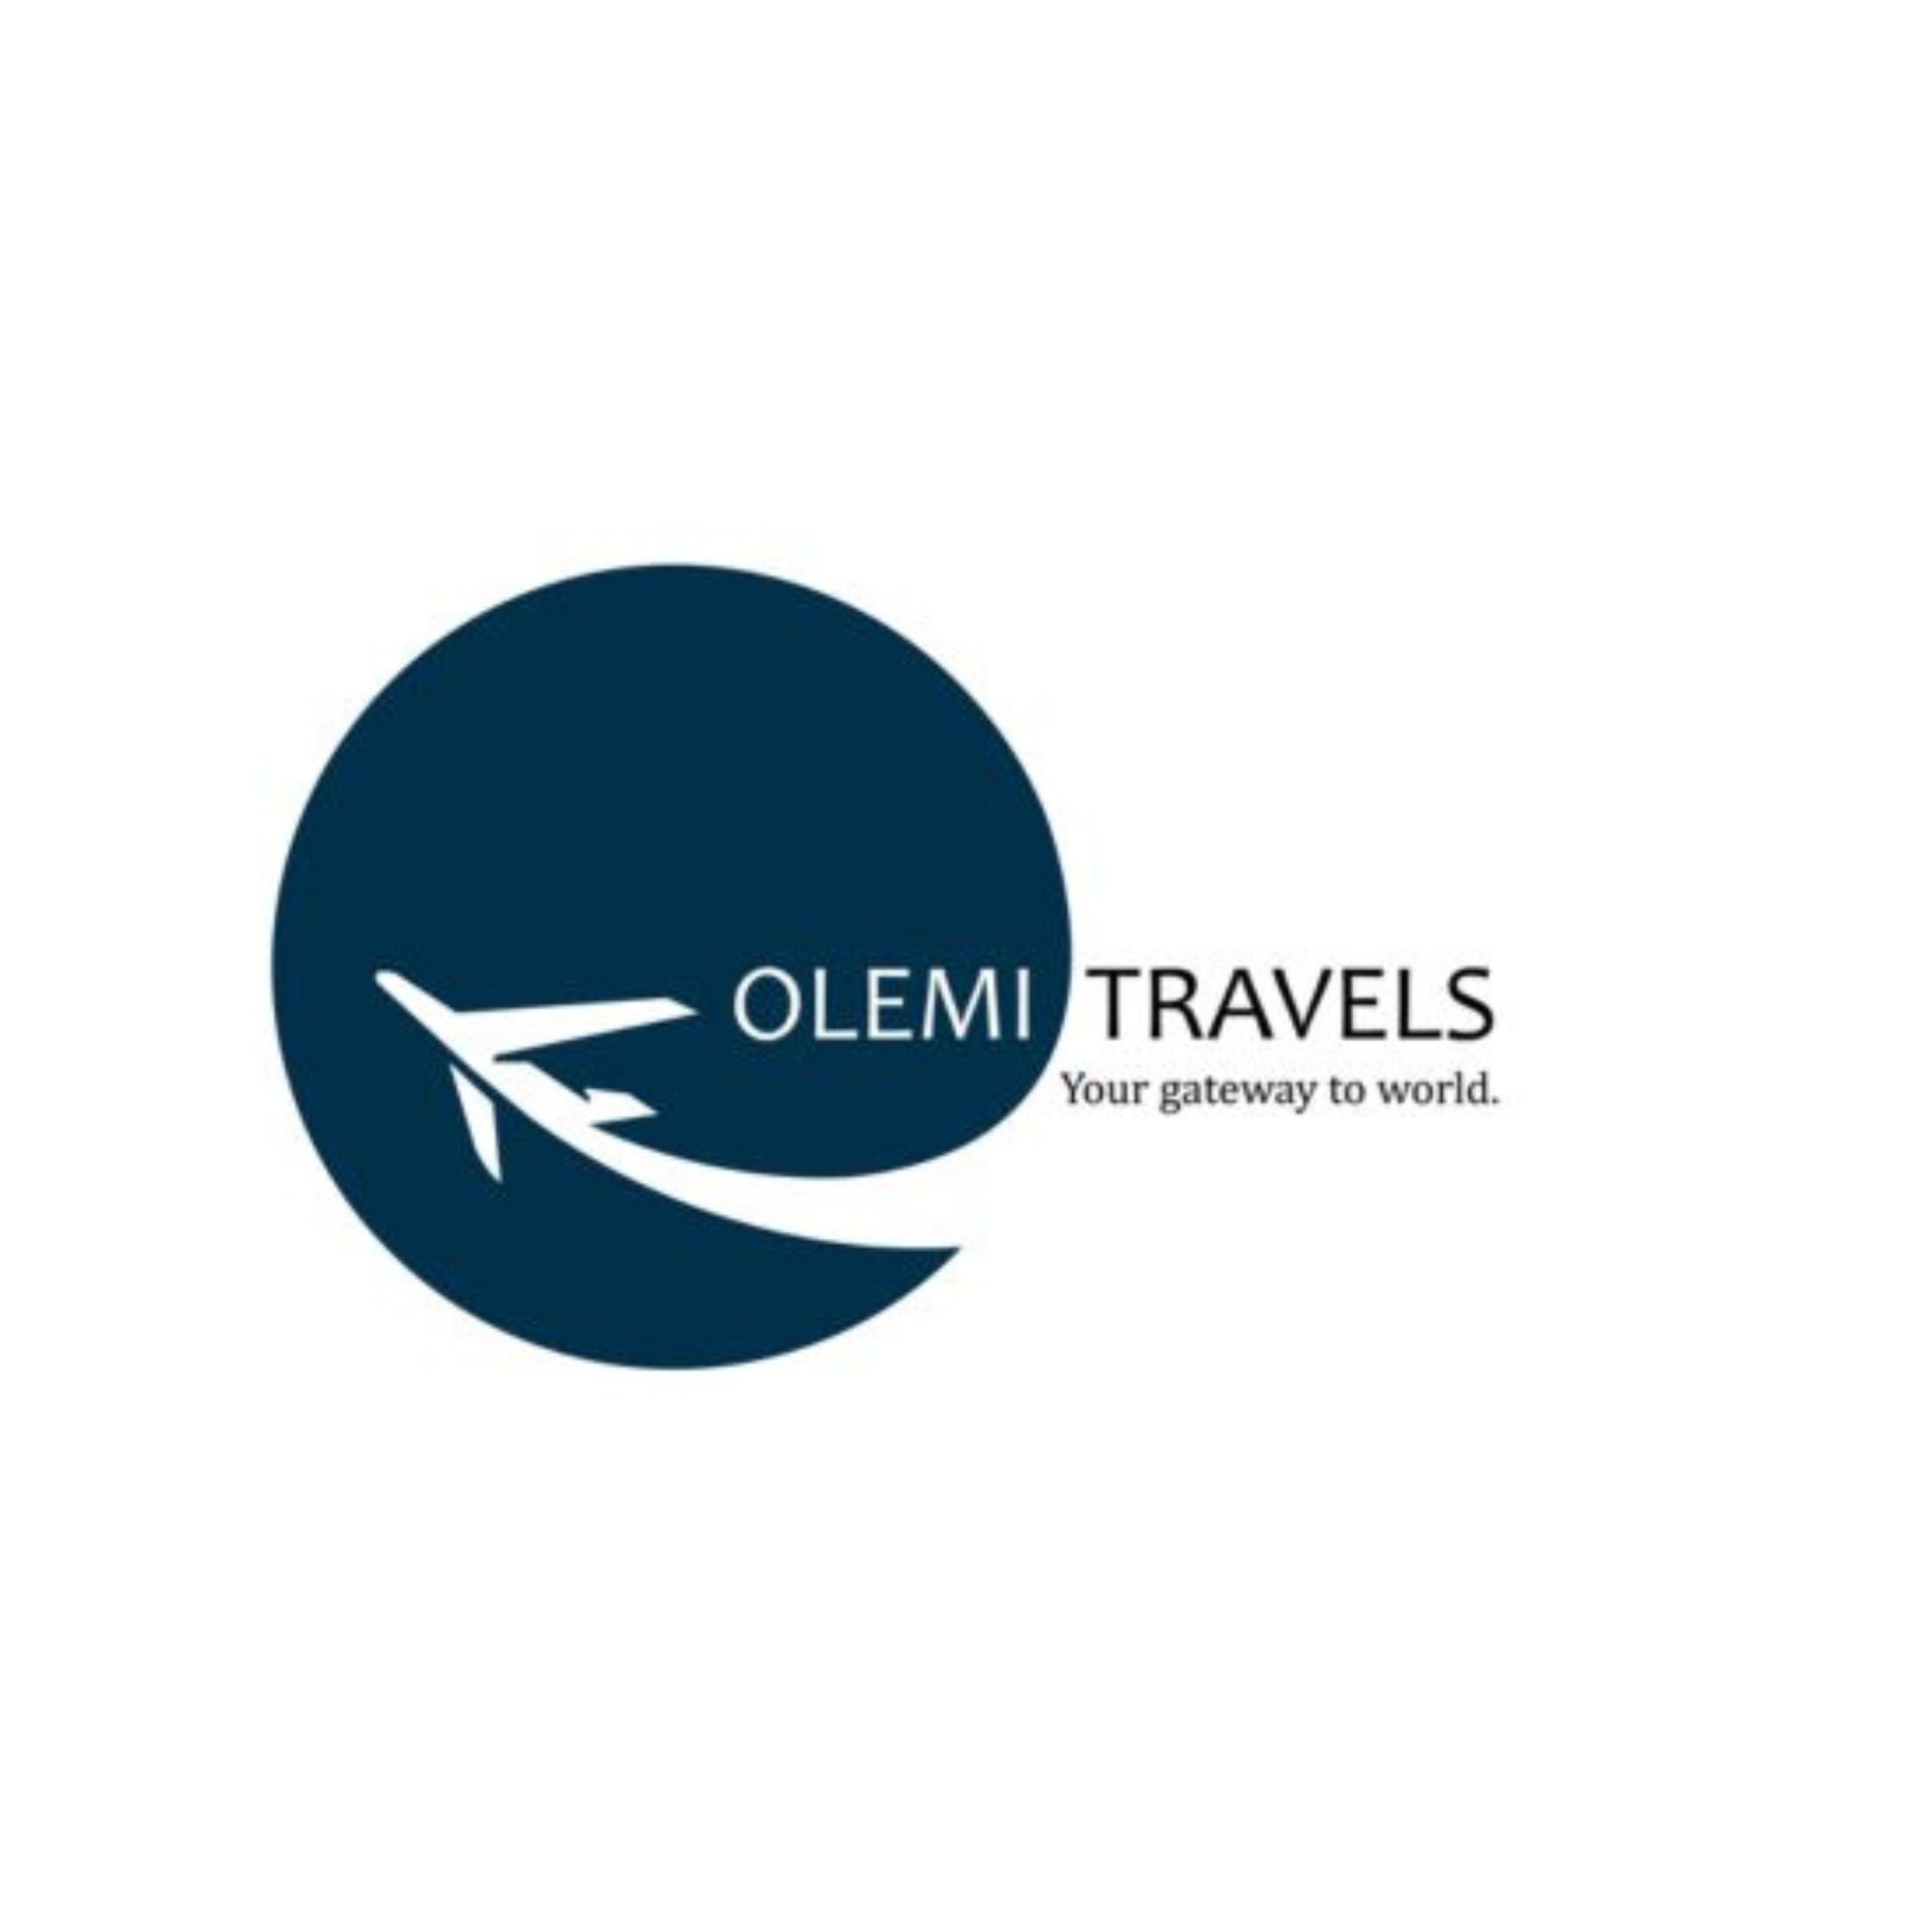 Olemi Travels Dubai